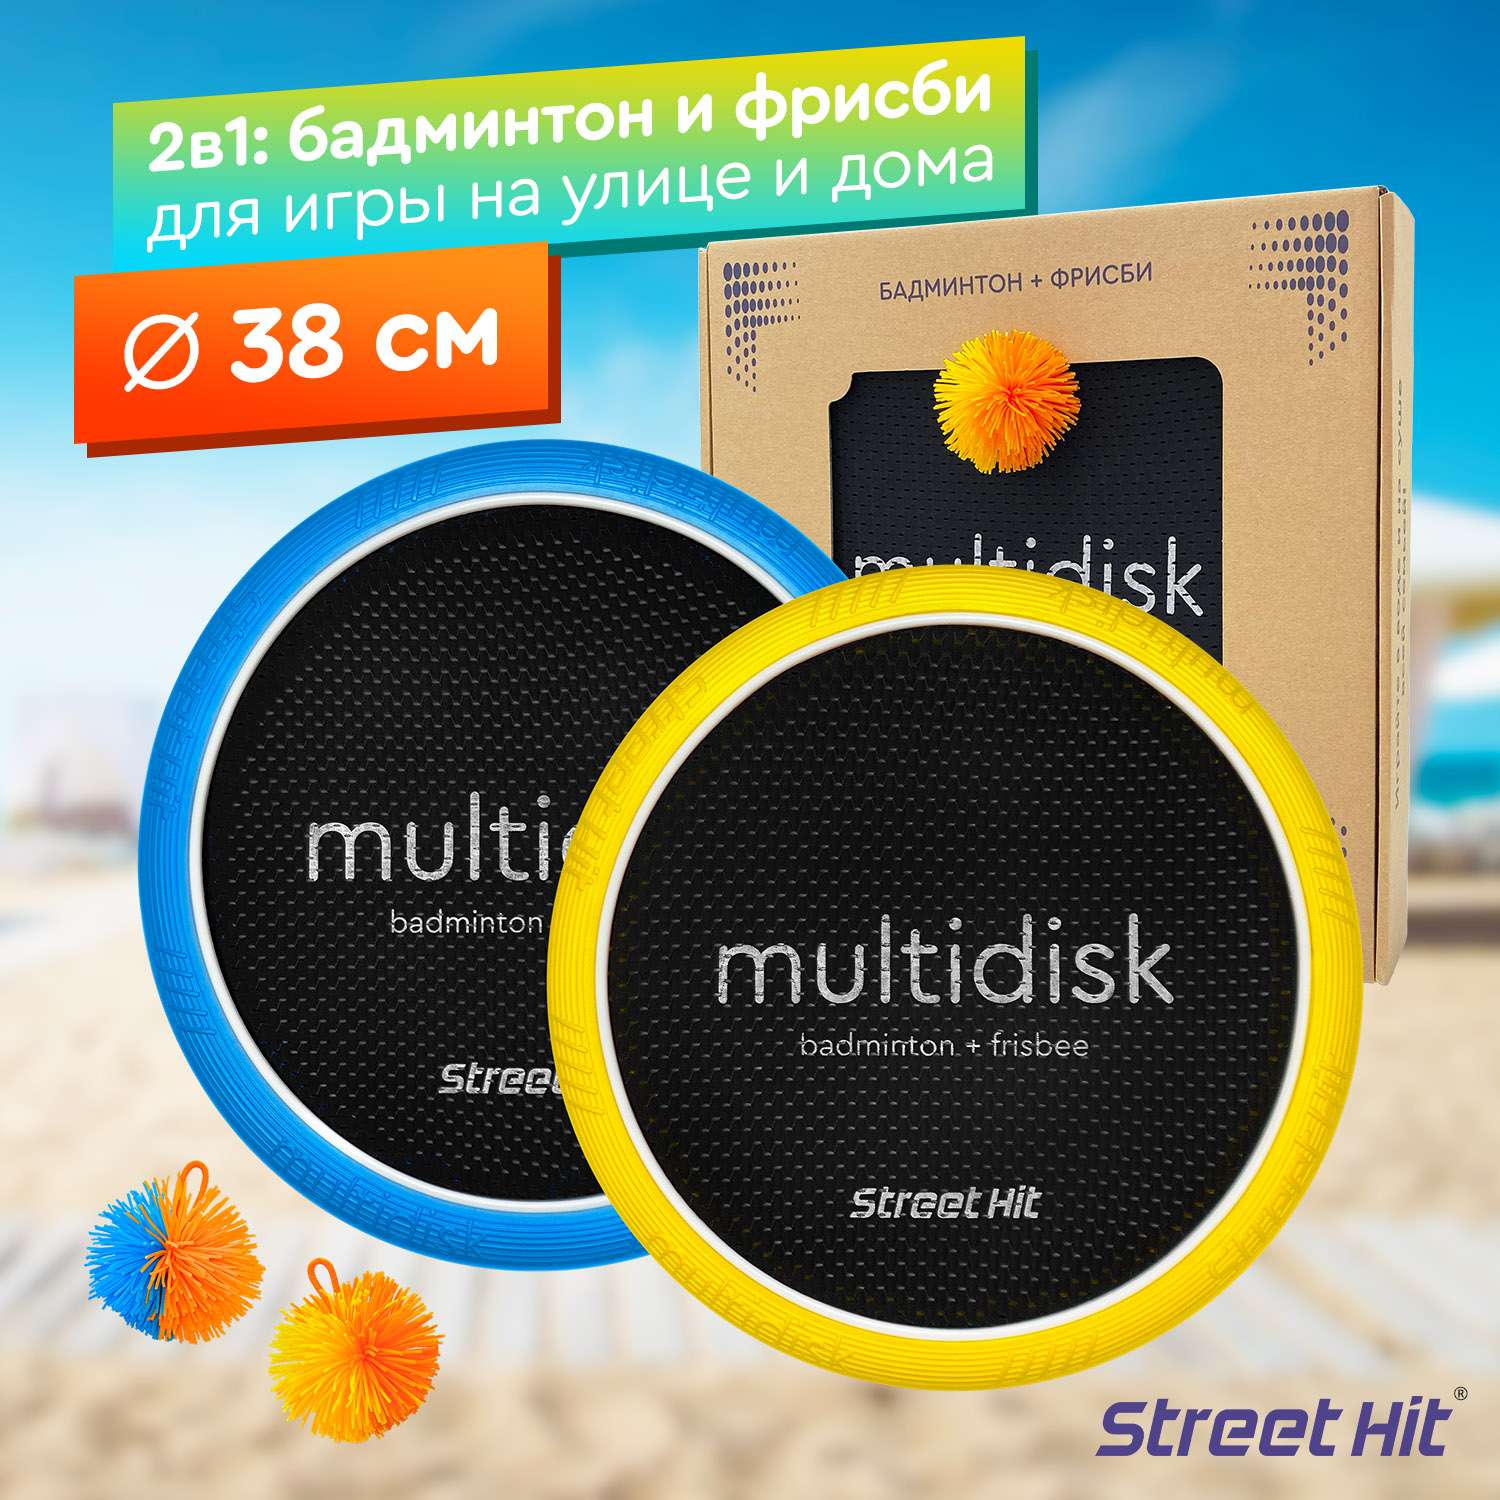 Набор для игры Street Hit Мультидиск Maxi 38 см желто-синий - фото 1